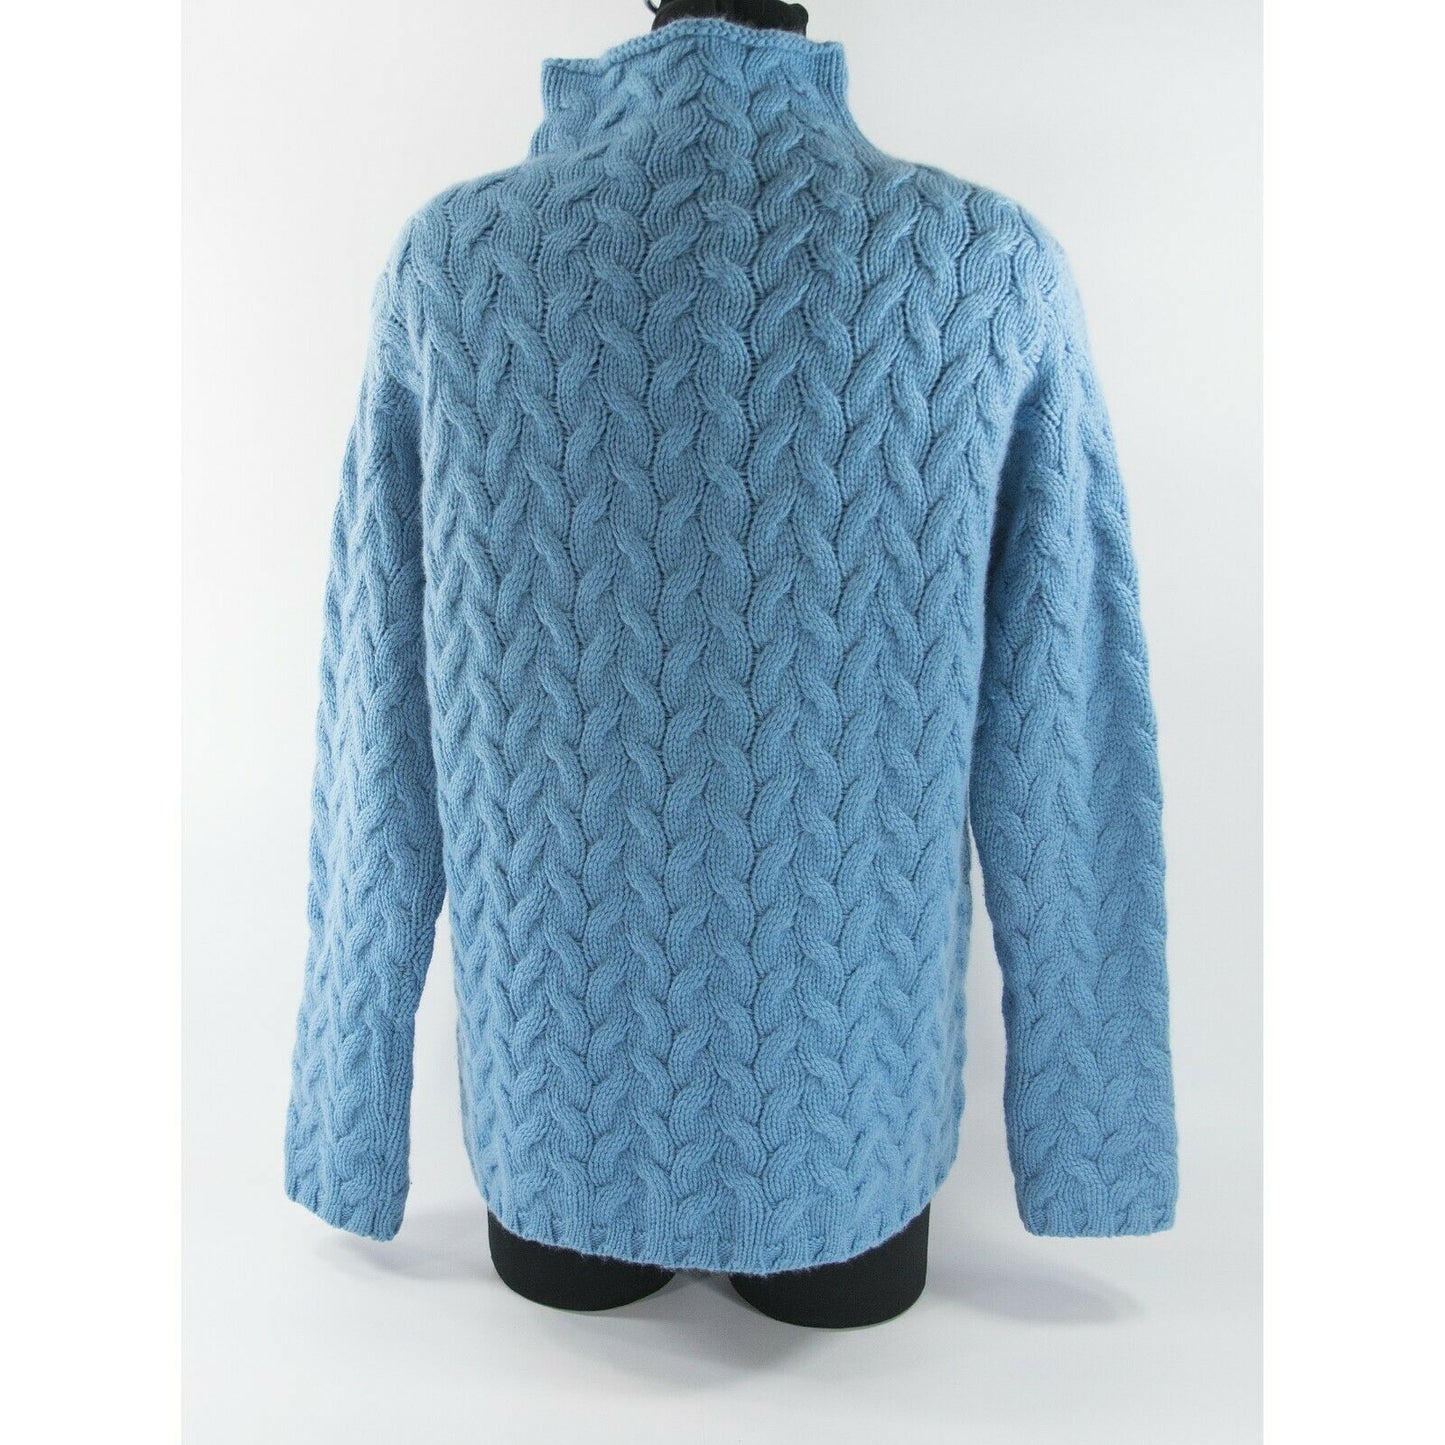 Loro Piana Blue Cashmere Cable Knit Turtleneck Sweater $1500 Size 48 12 M